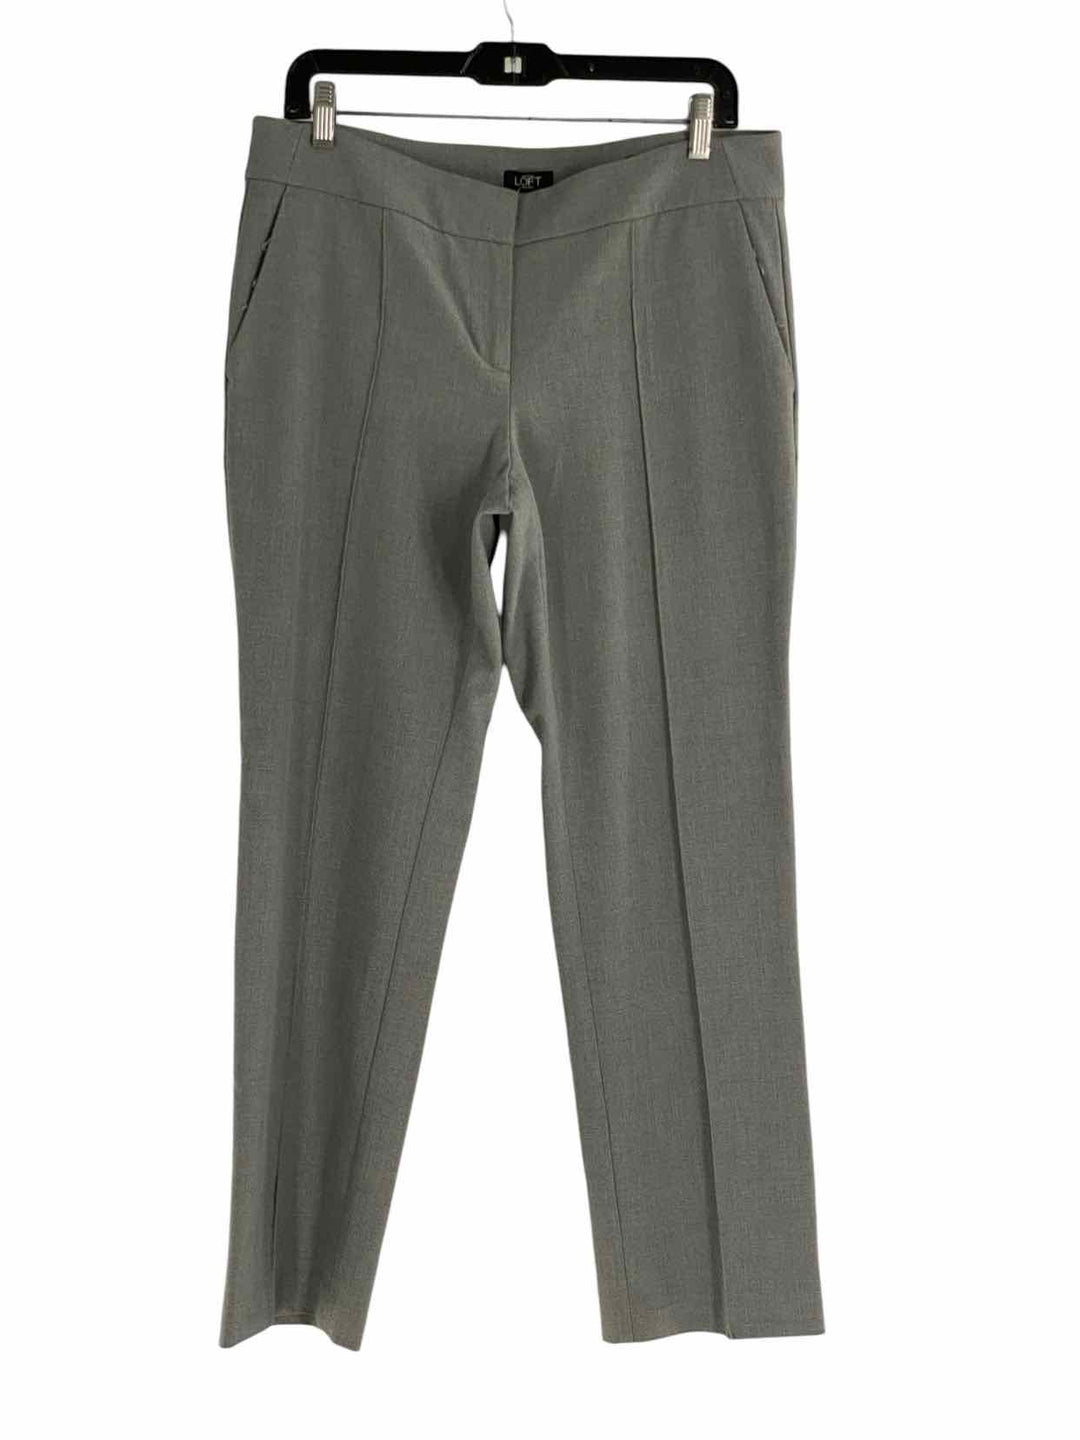 Loft Size 10P Grey Pants